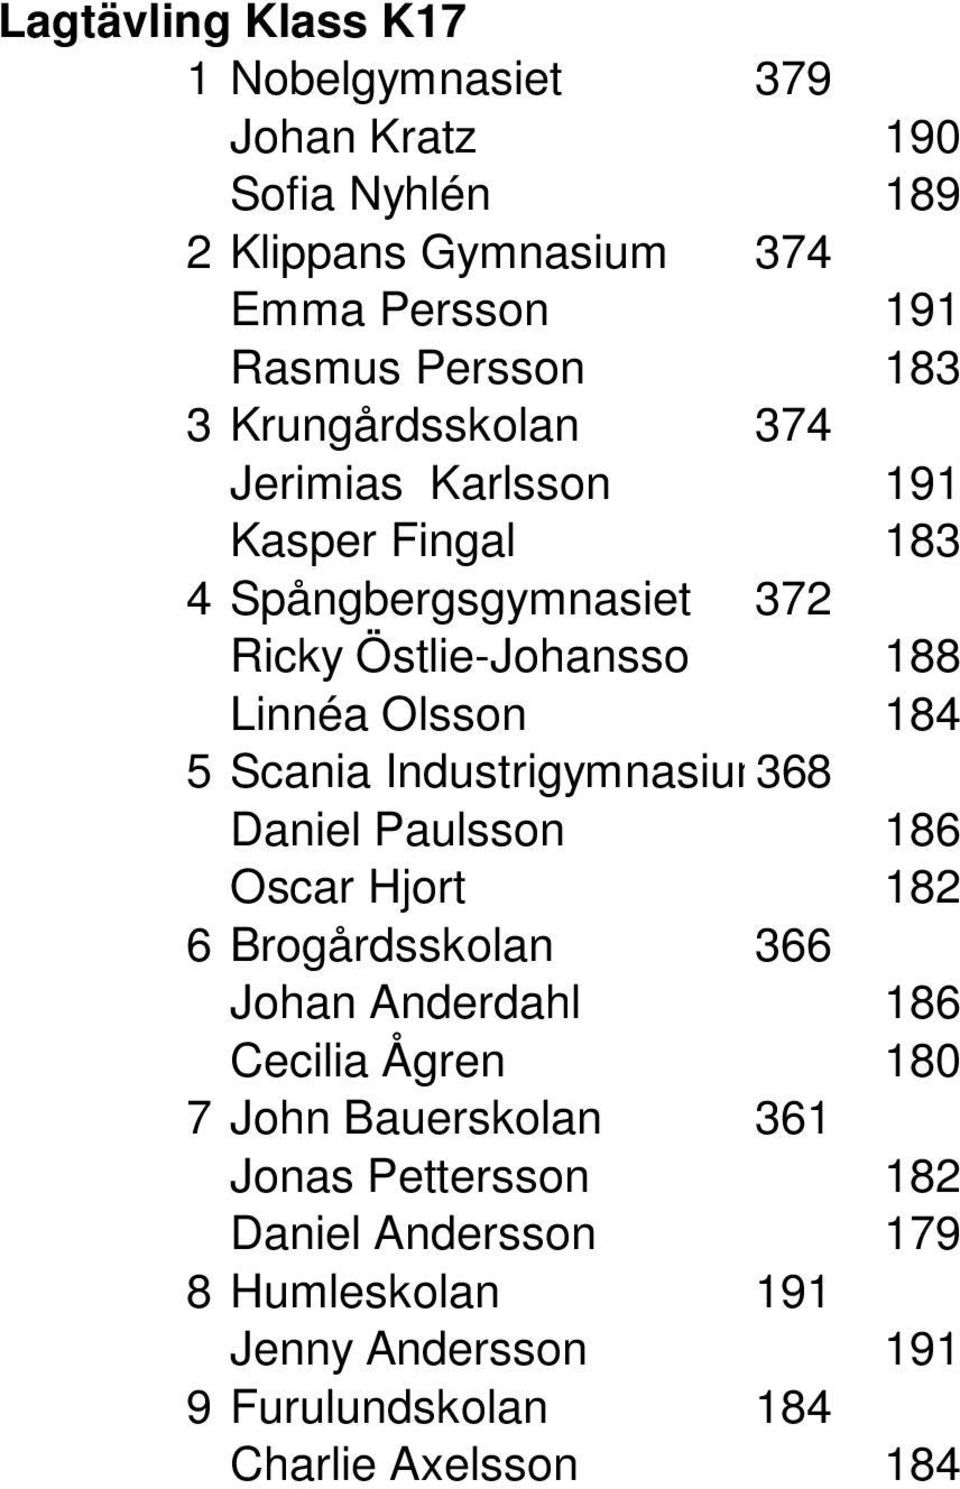 184 5 Scania Industrigymnasium368 Daniel Paulsson 186 Oscar Hjort 182 6 Brogårdsskolan 366 Johan Anderdahl 186 Cecilia Ågren 180 7